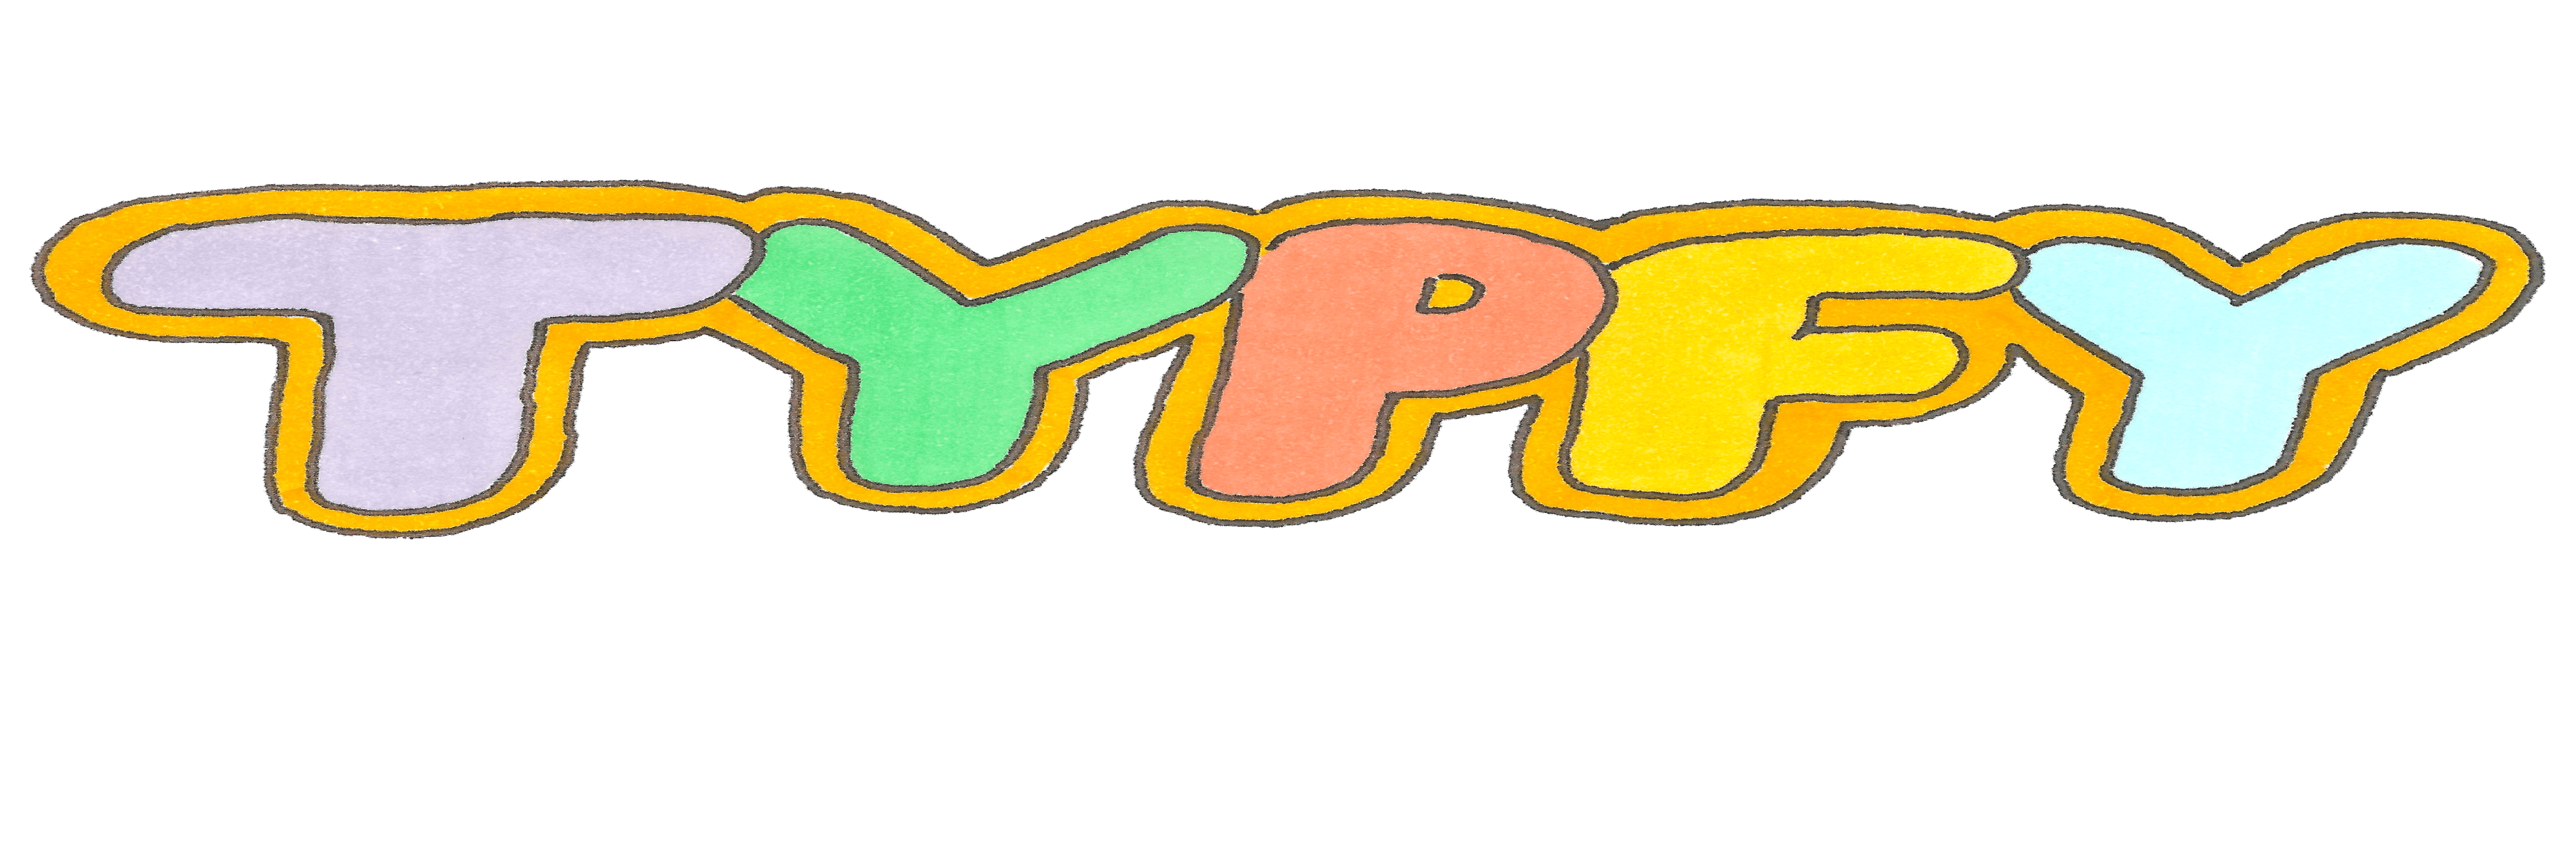 TYPFY bannière